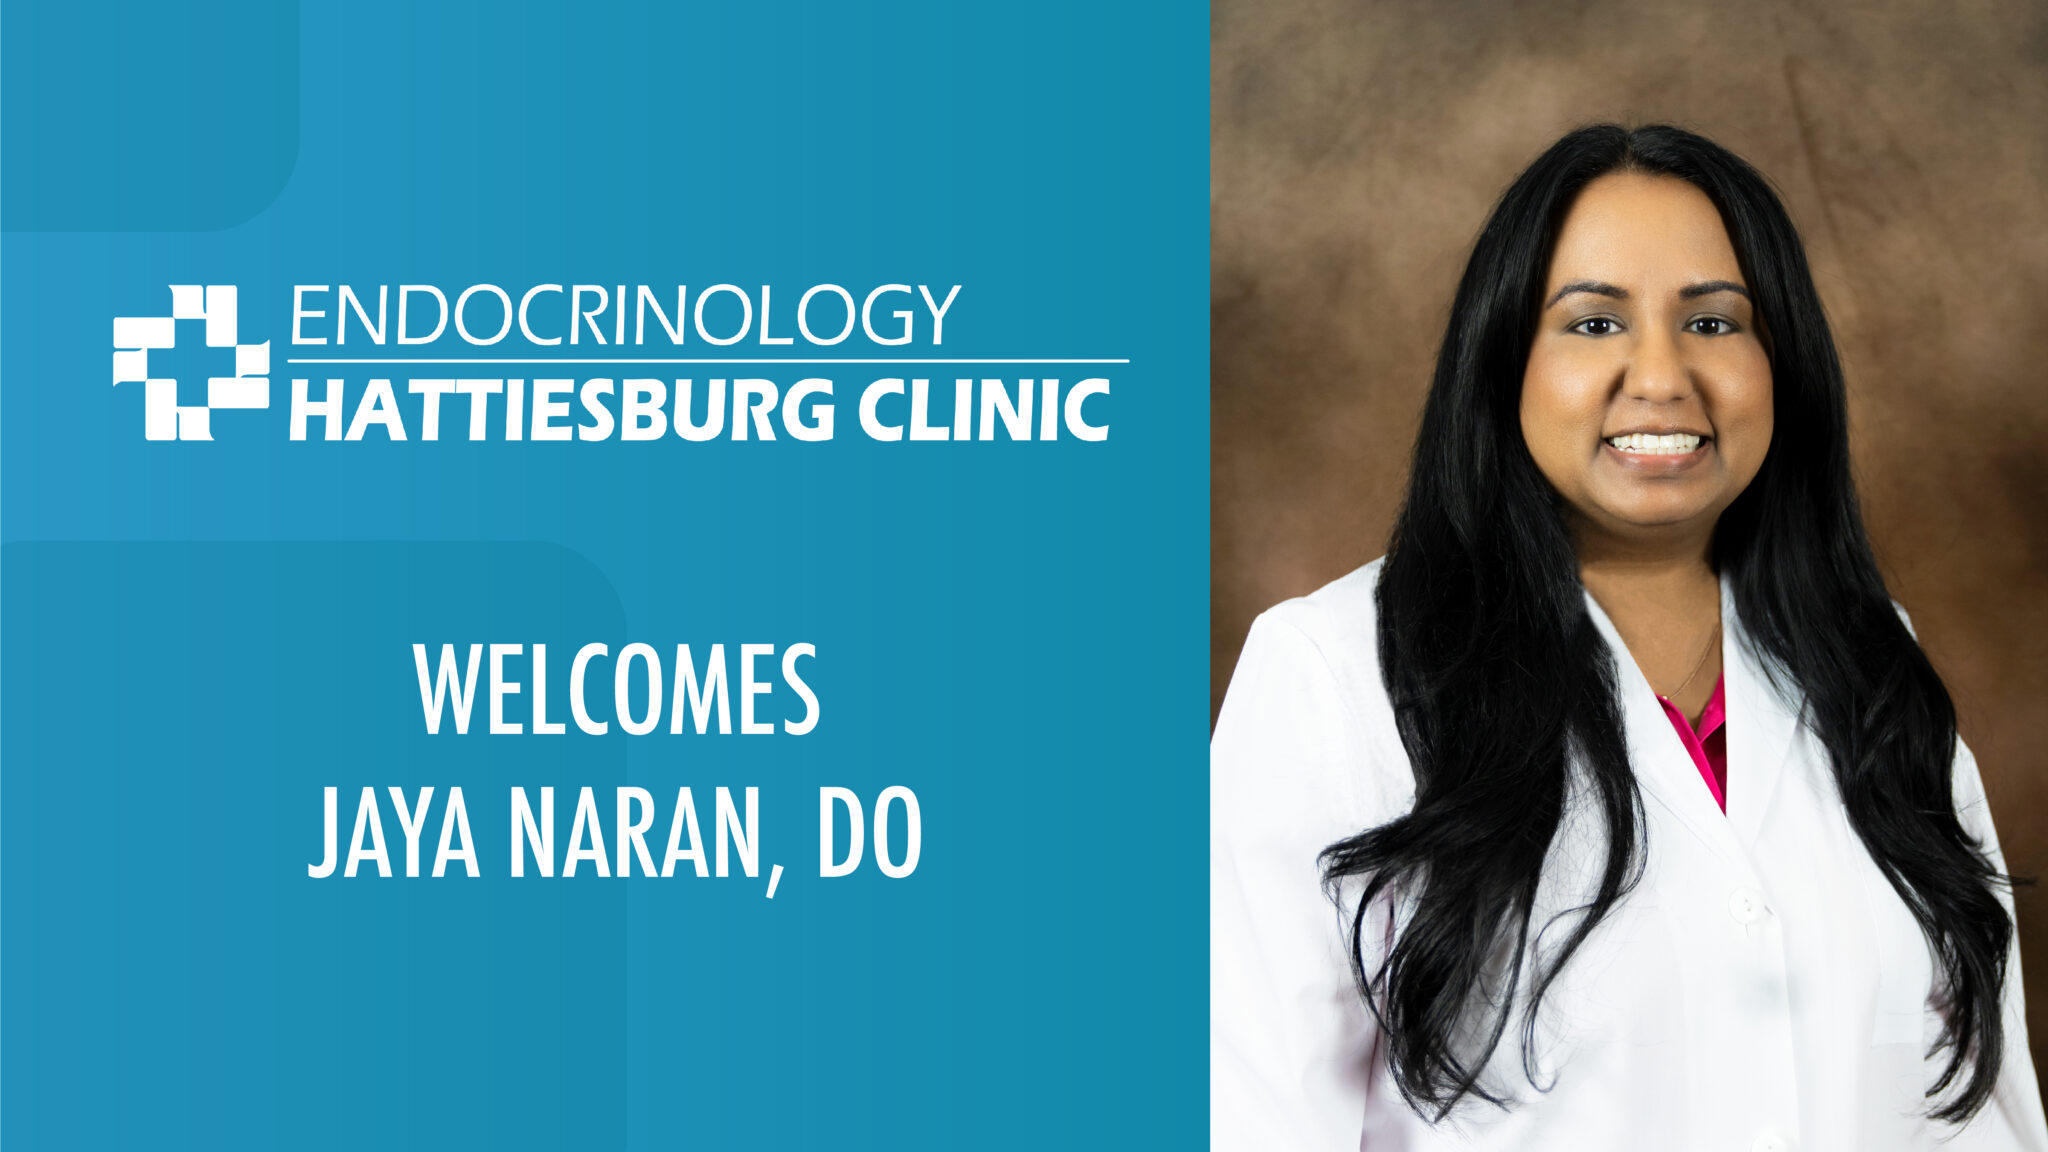 Welcome, Dr. Naran